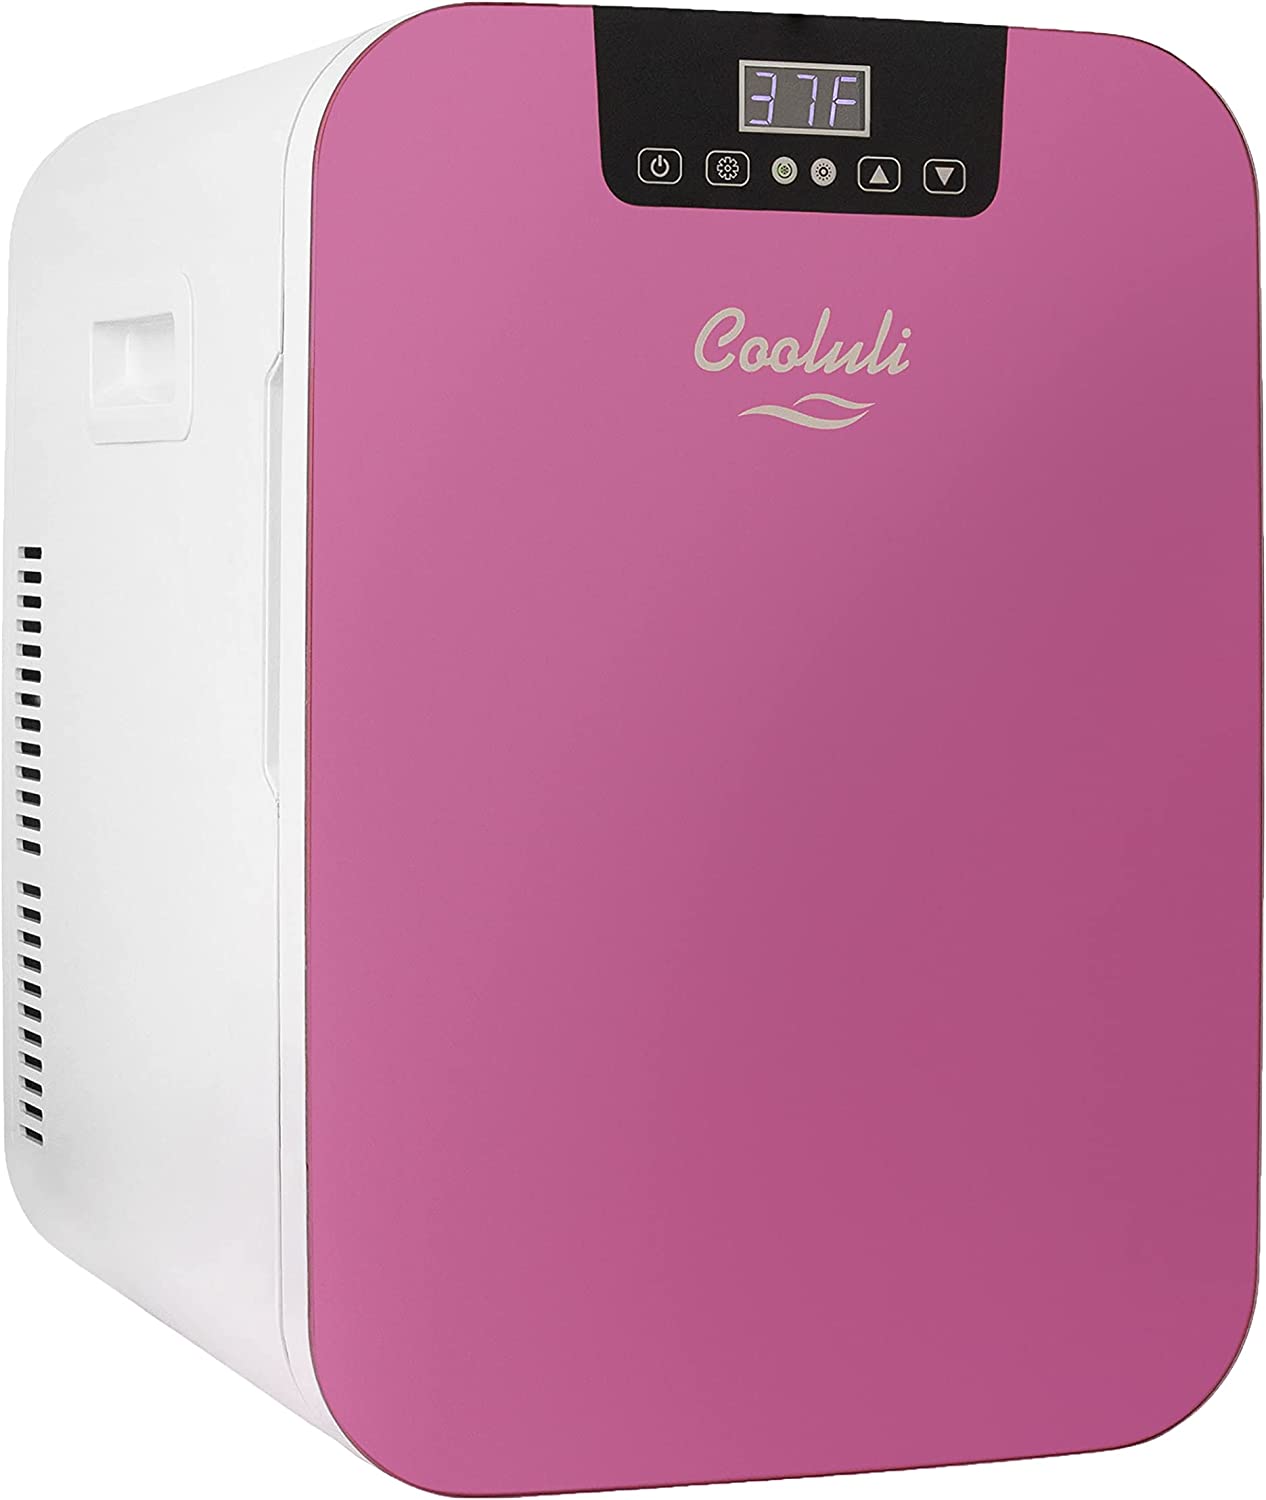 Cooluli Concord 20 Liter Portable Compact Mini Fridge - Pink, 1